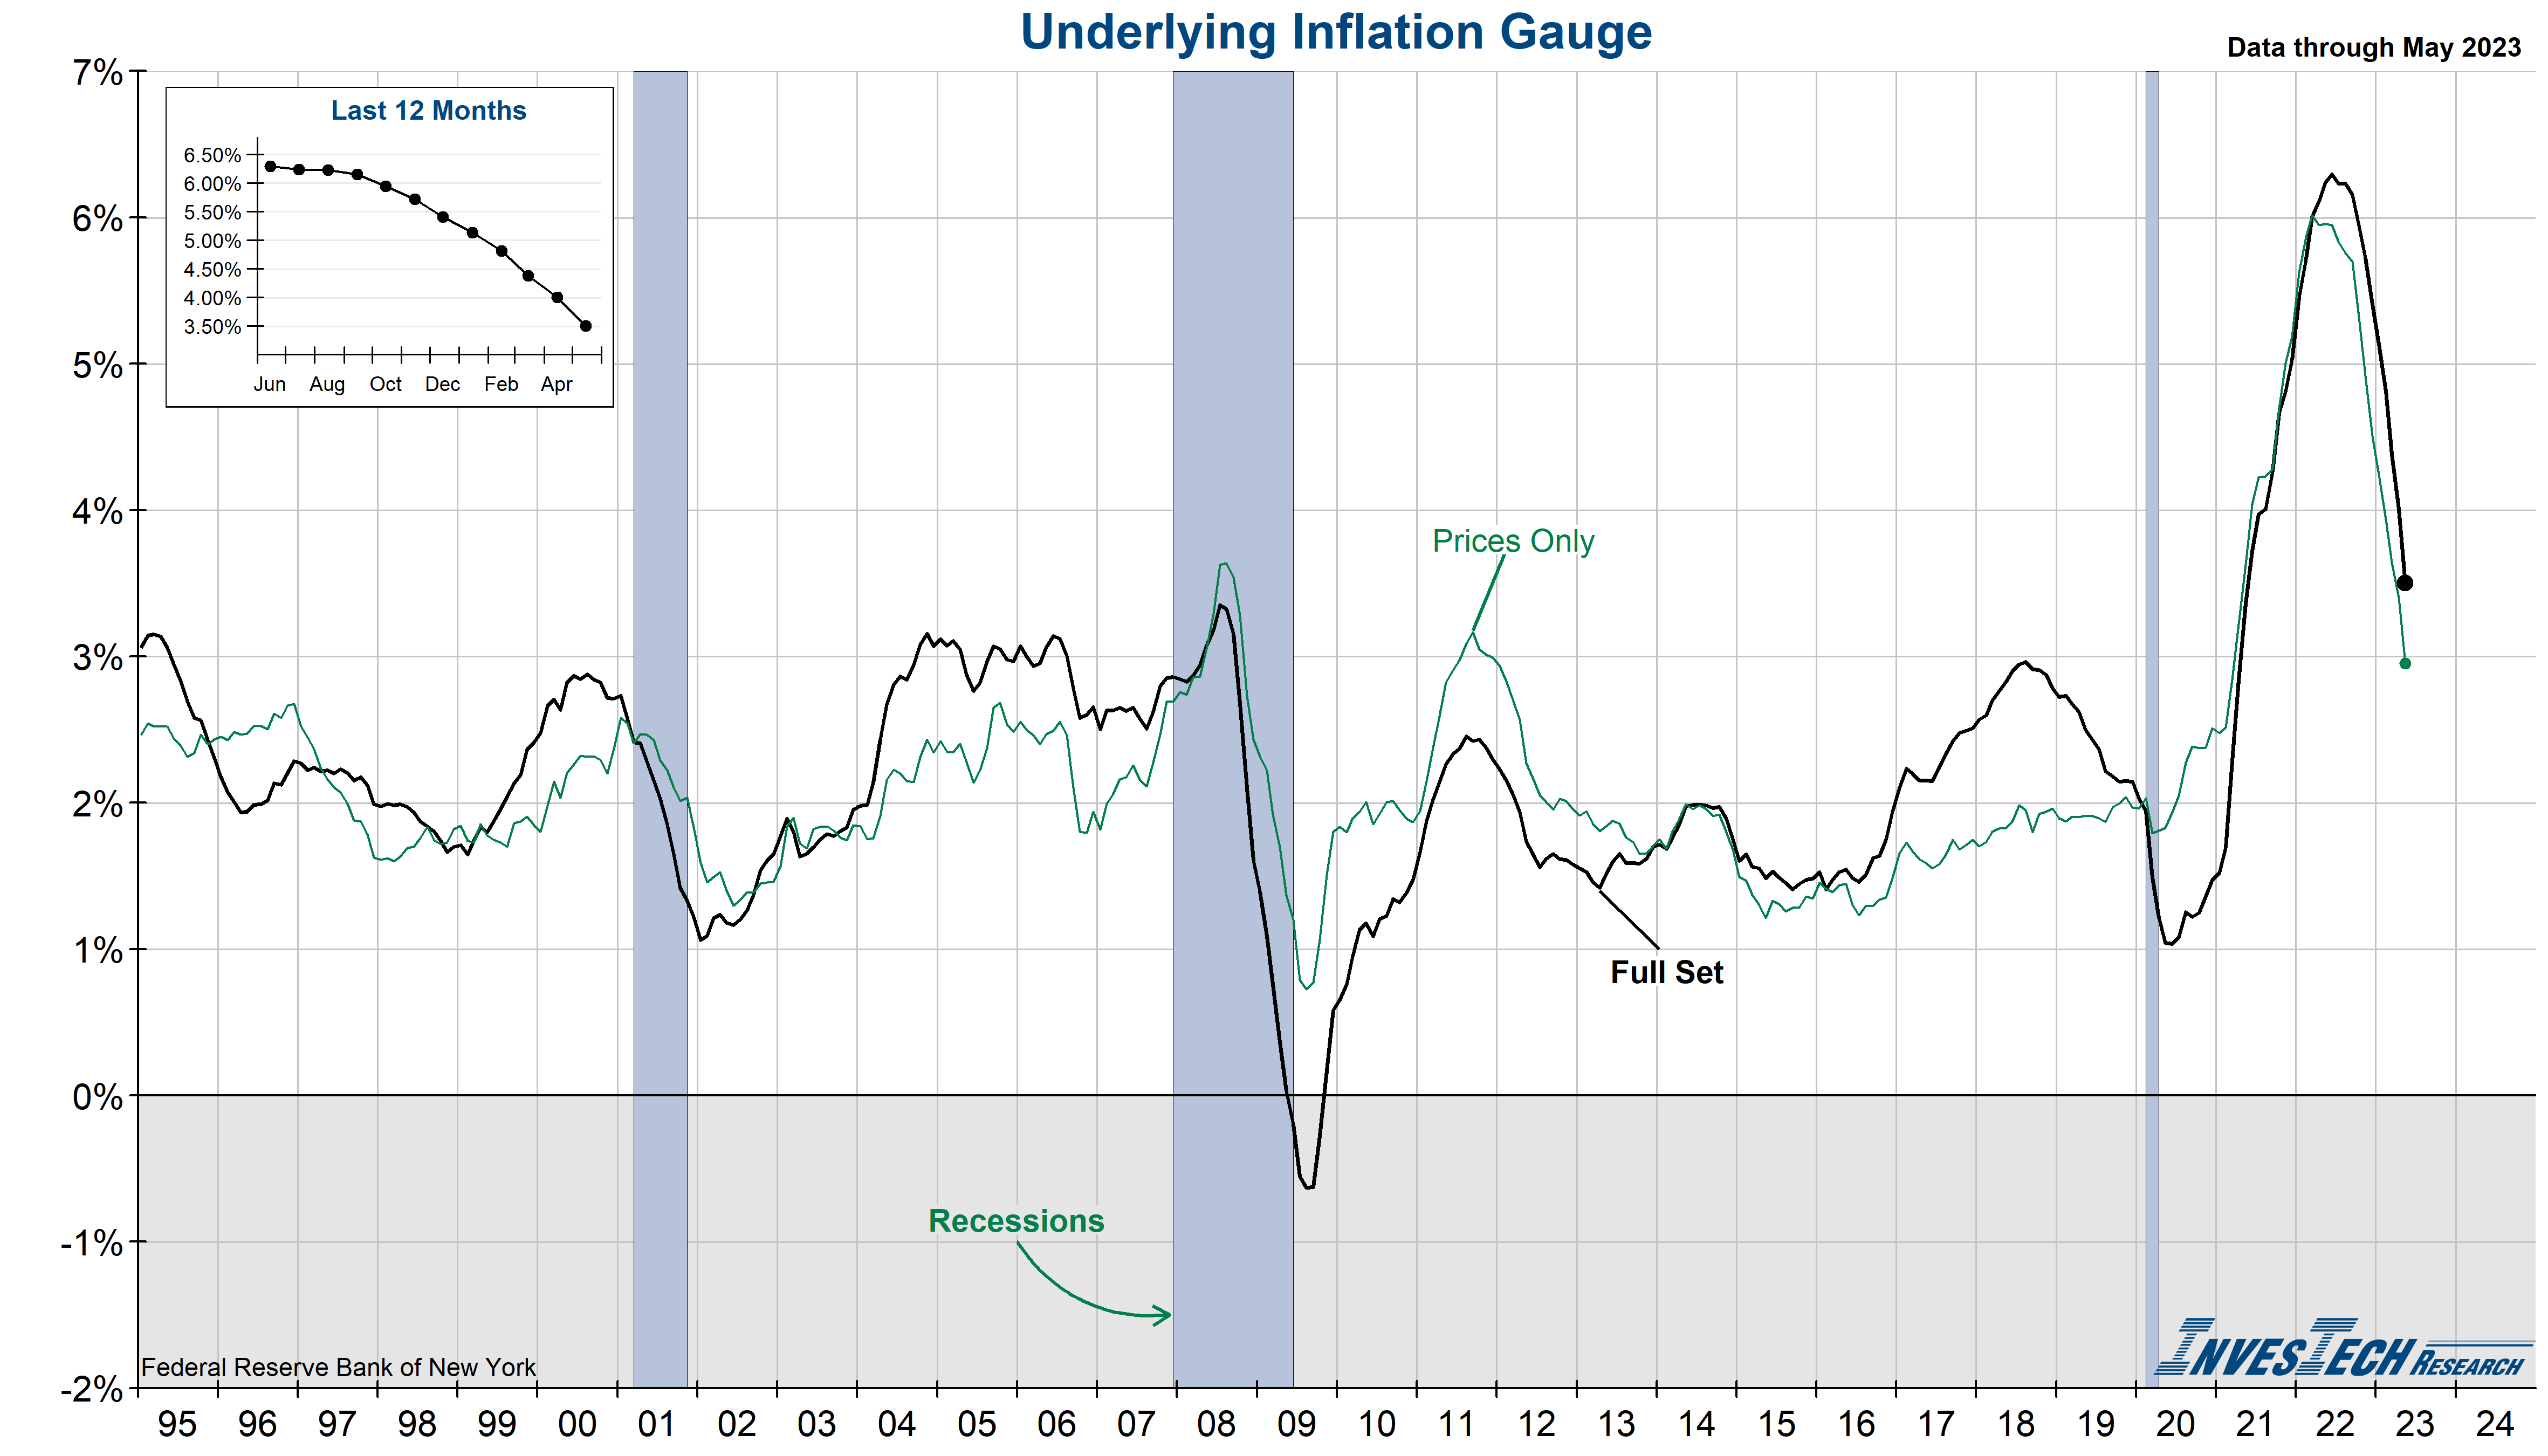 Underlying Inflation Gauge (UIG)